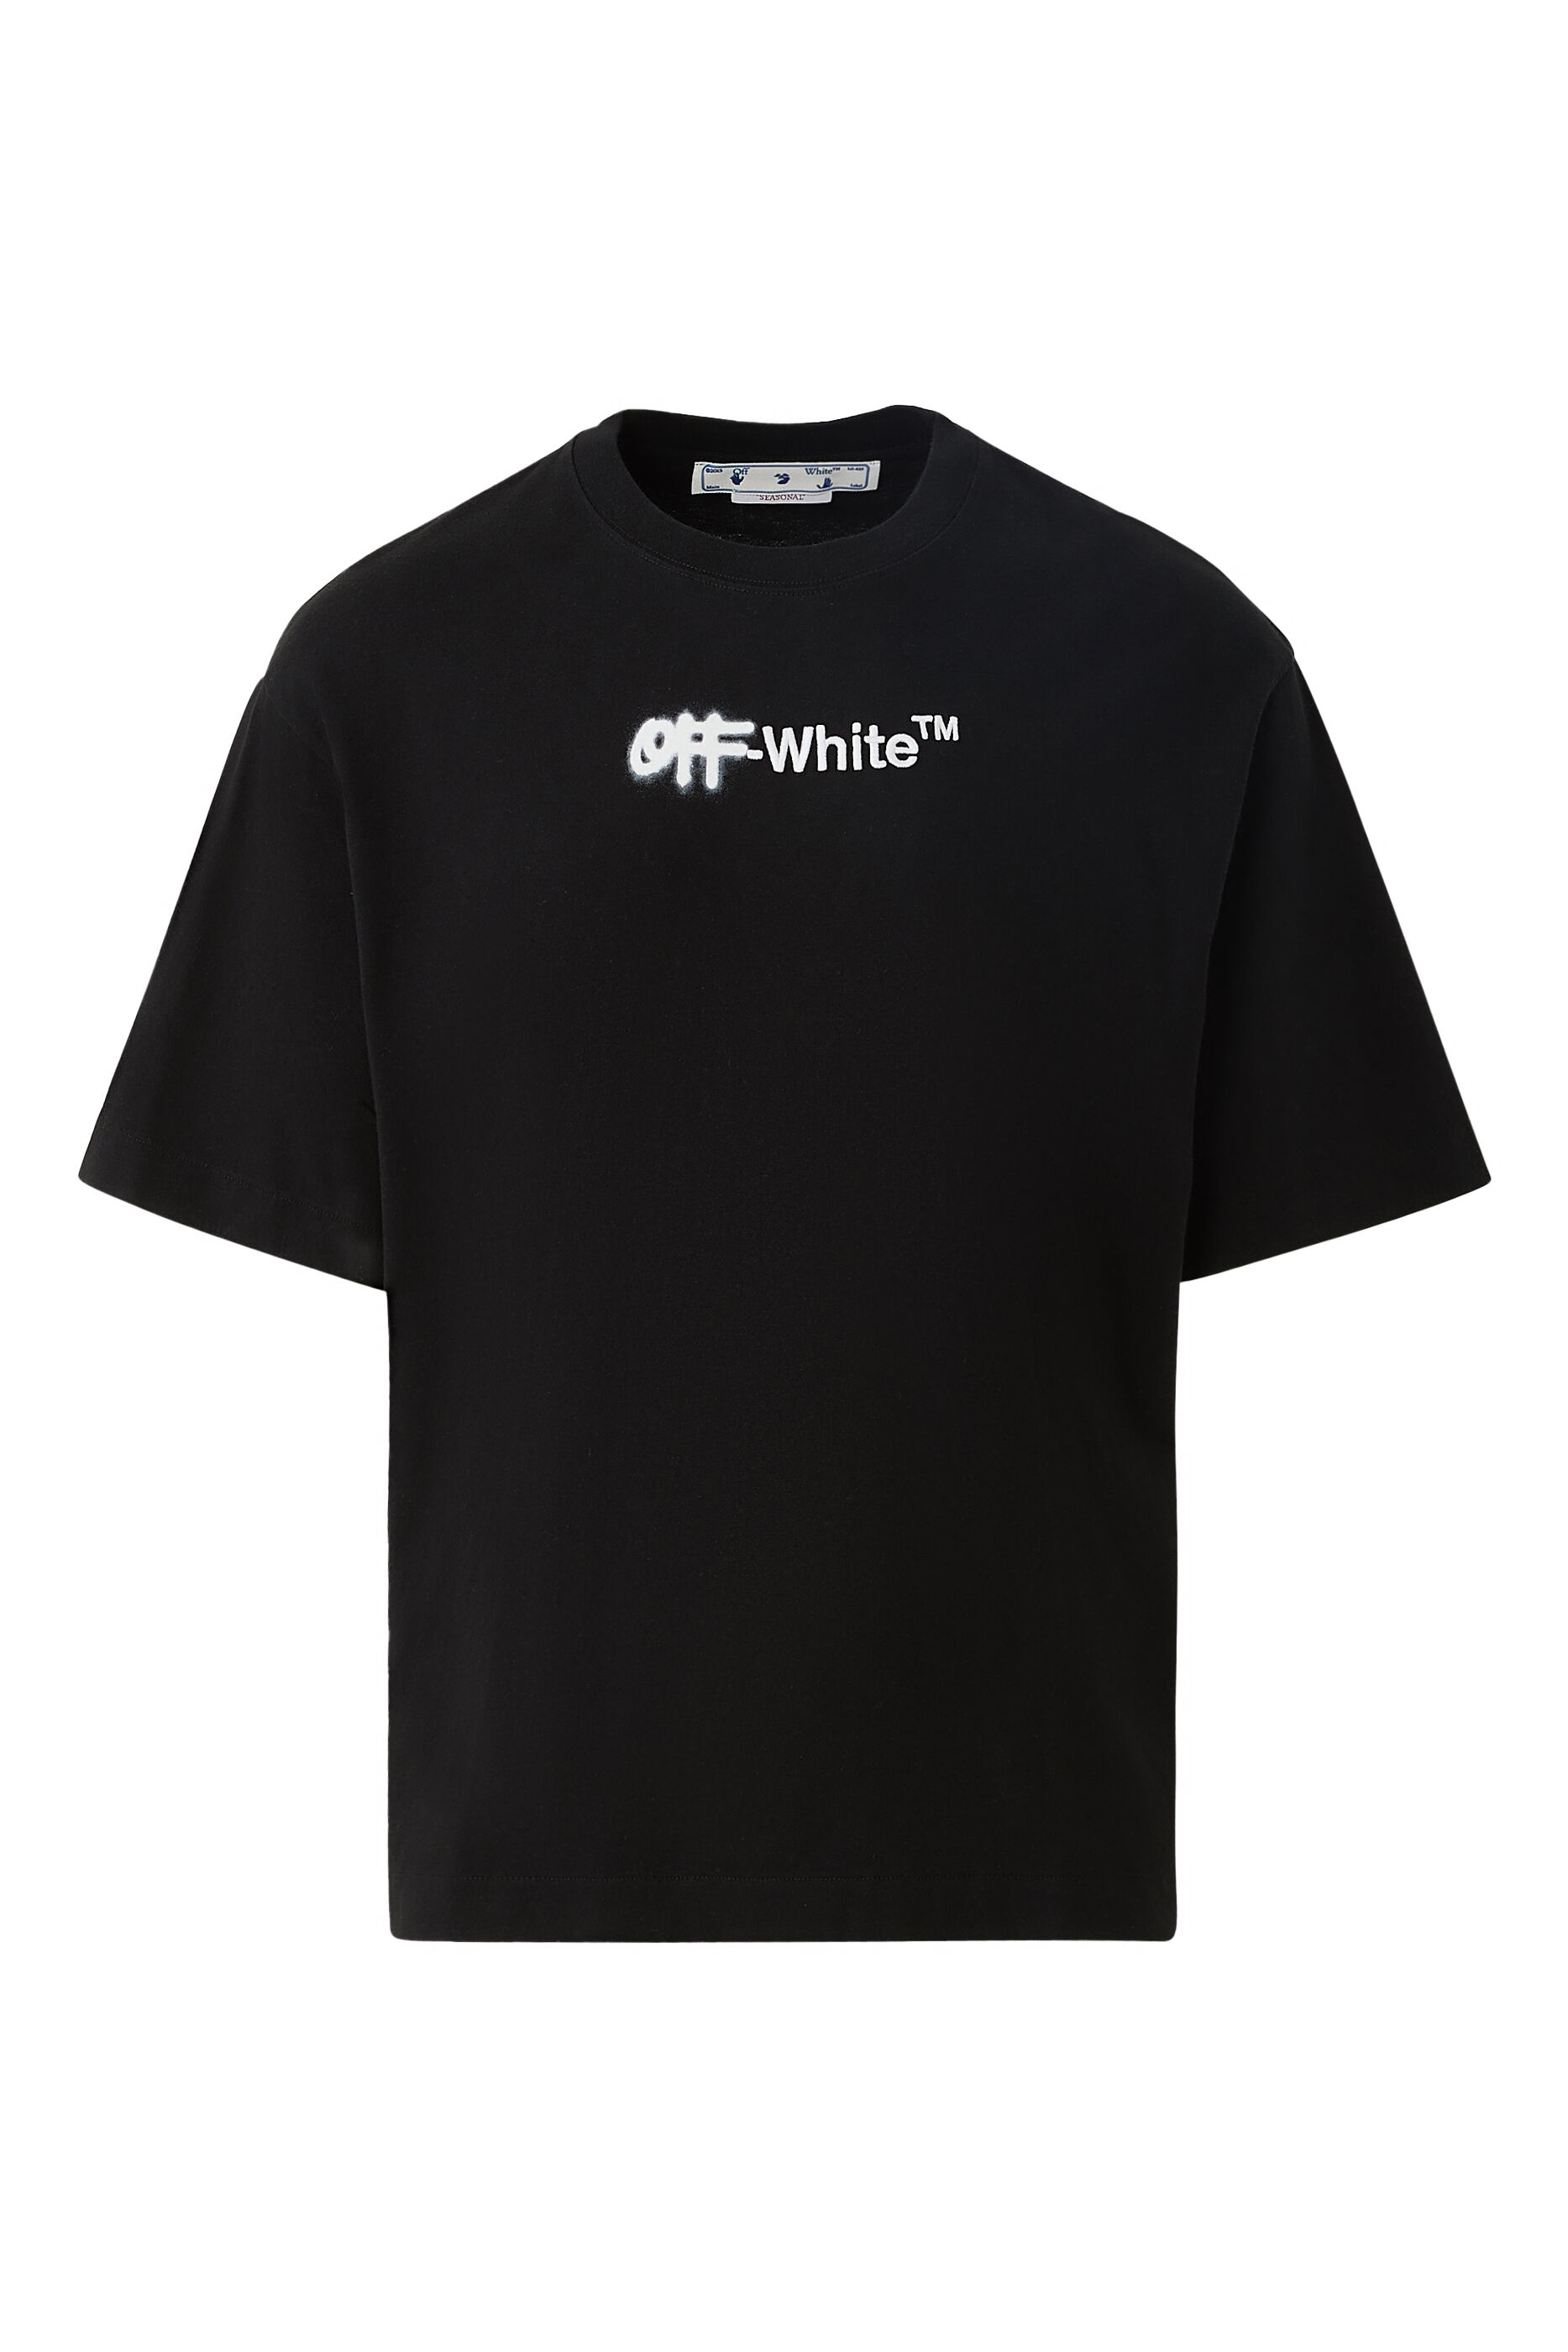 Off-White White Helvetica T-Shirt